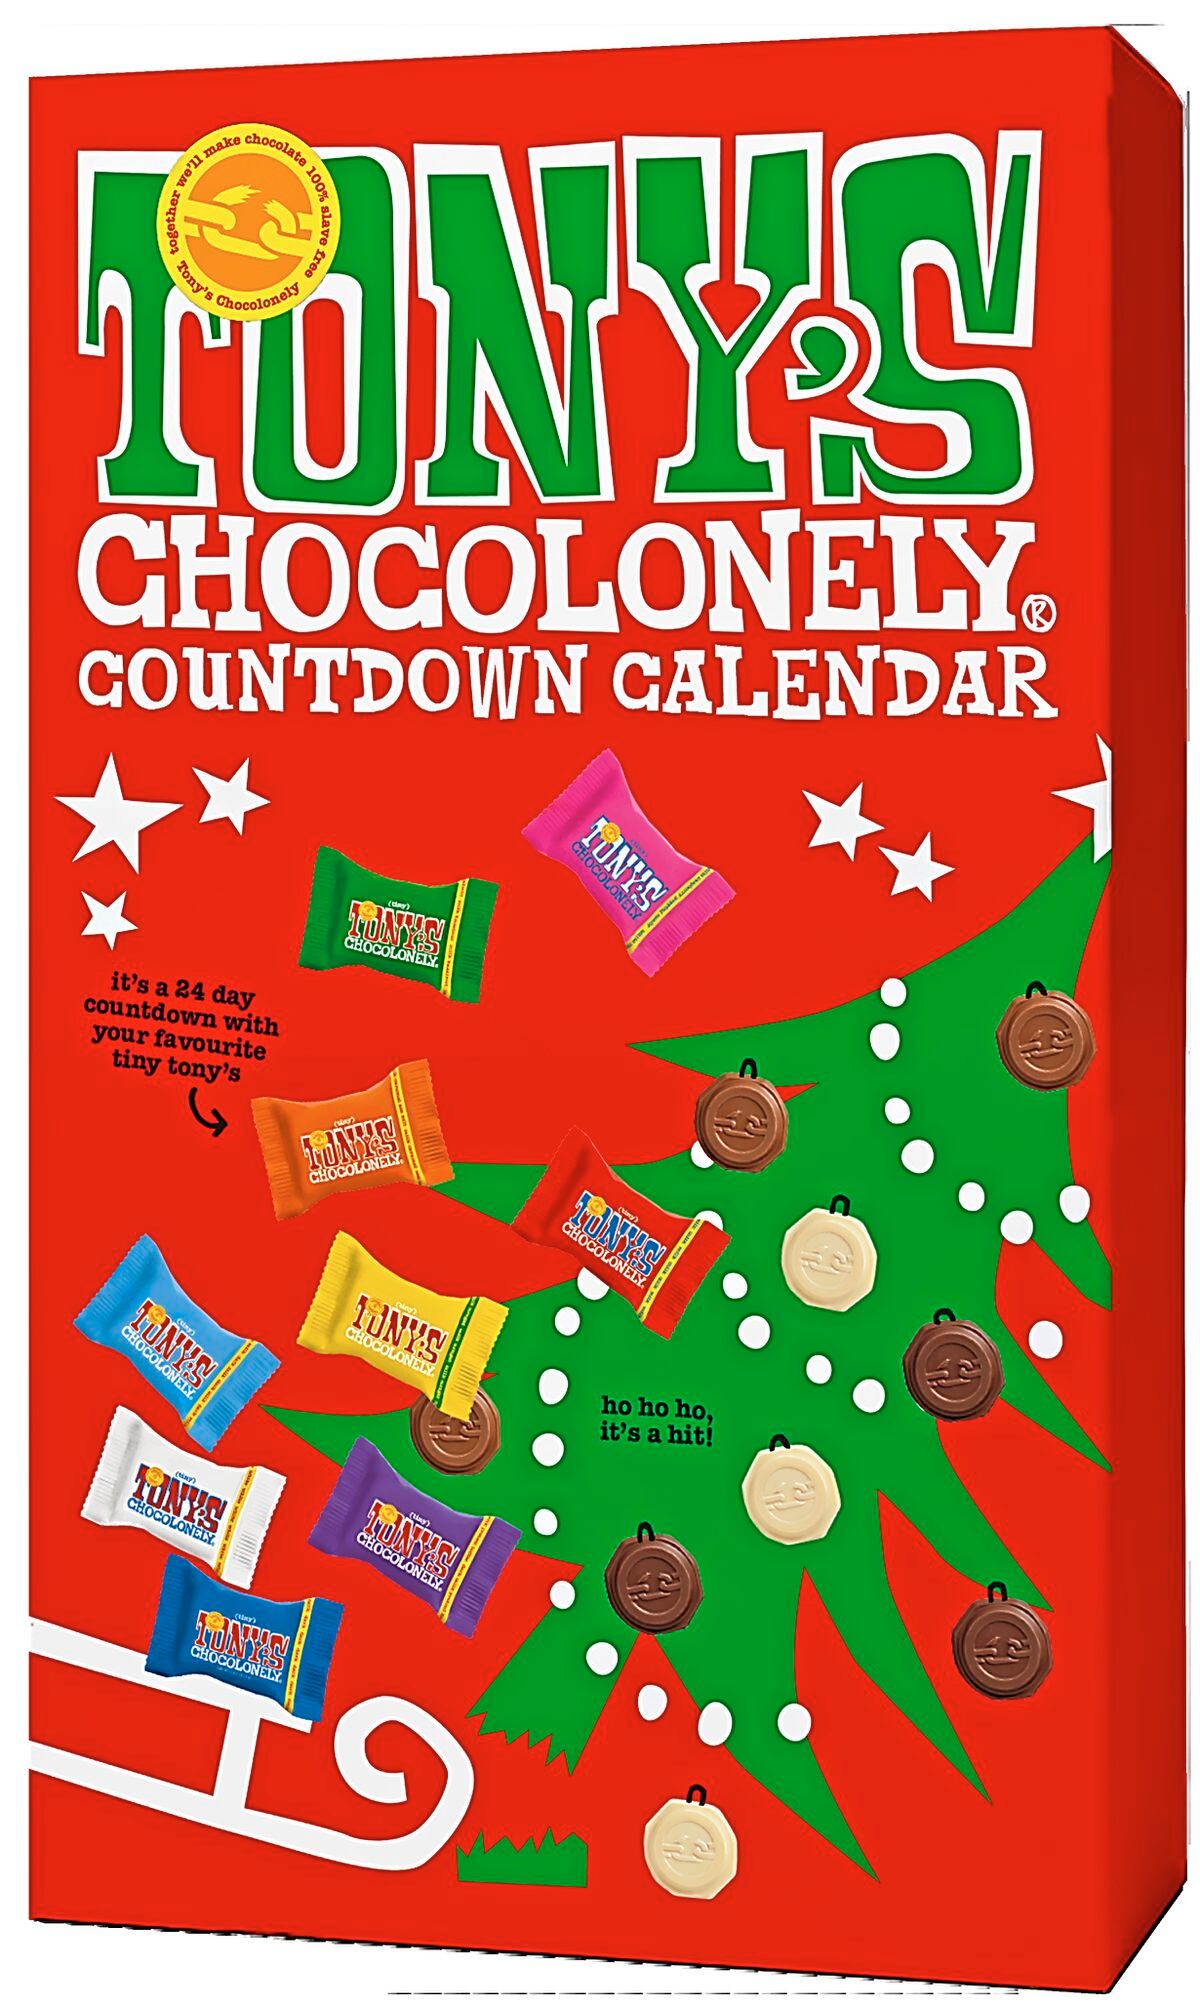 Tony’s Chocolonely Countdown Calendar